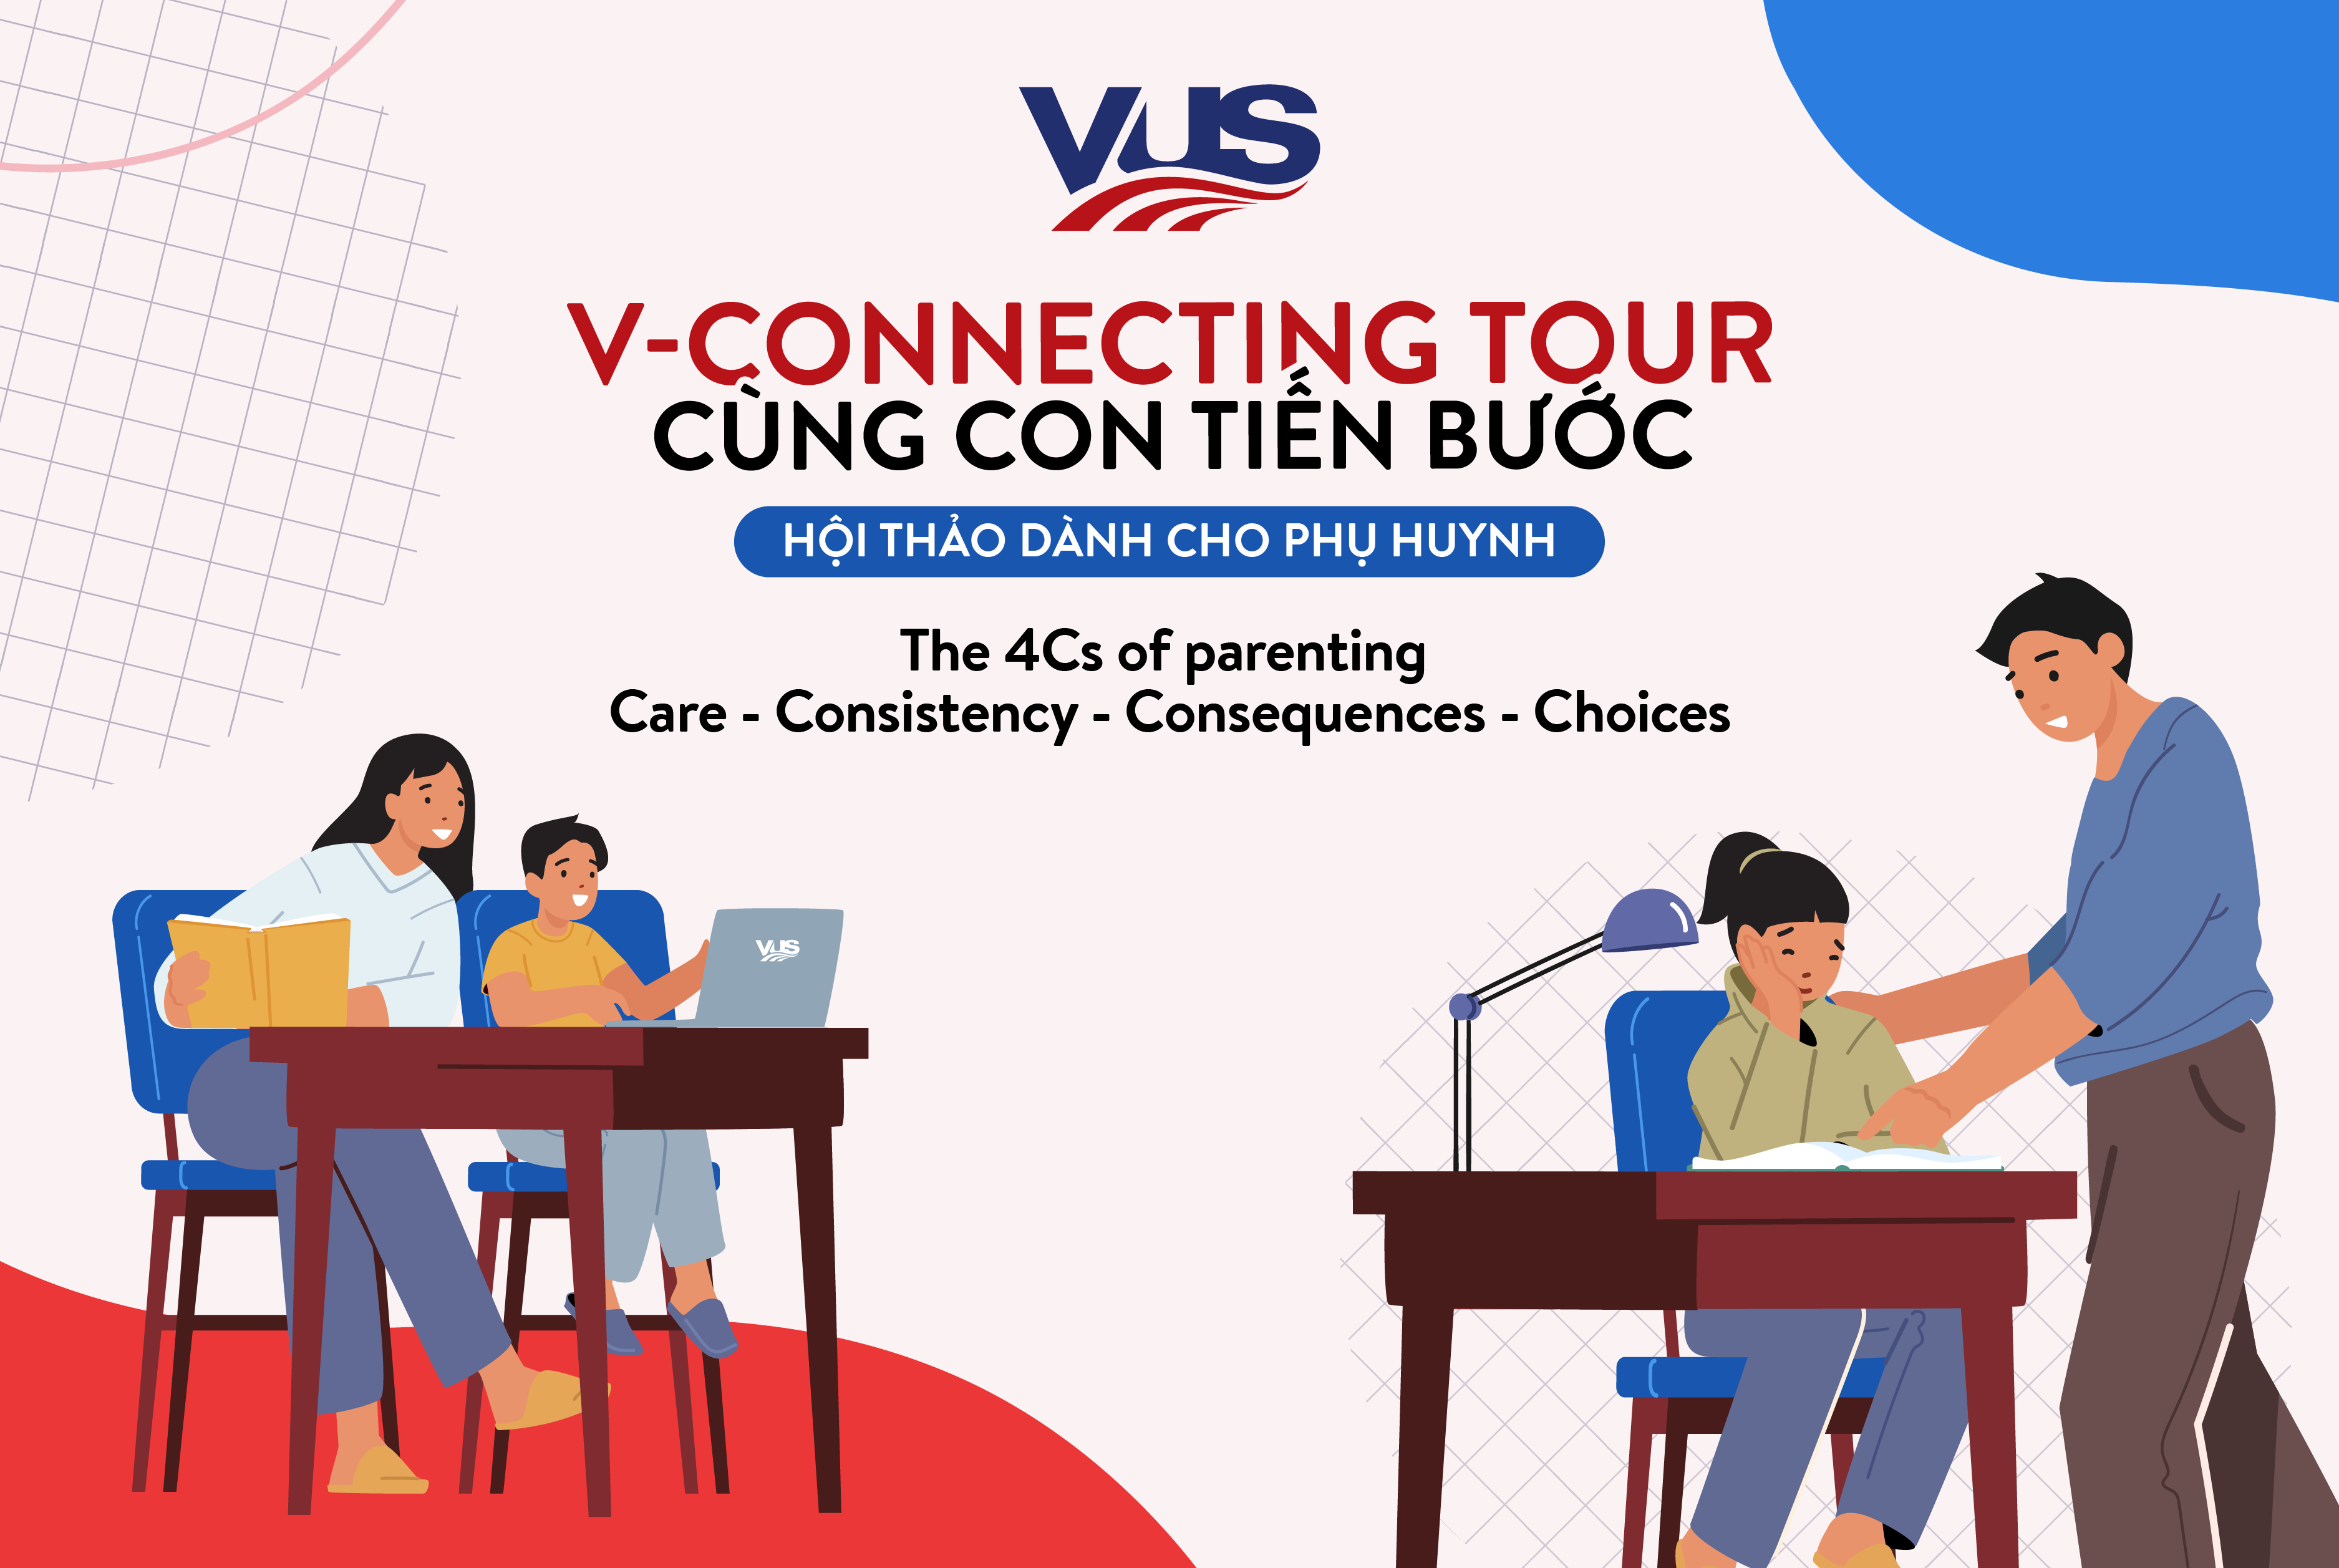 Hoi thao V-Connecting Tour